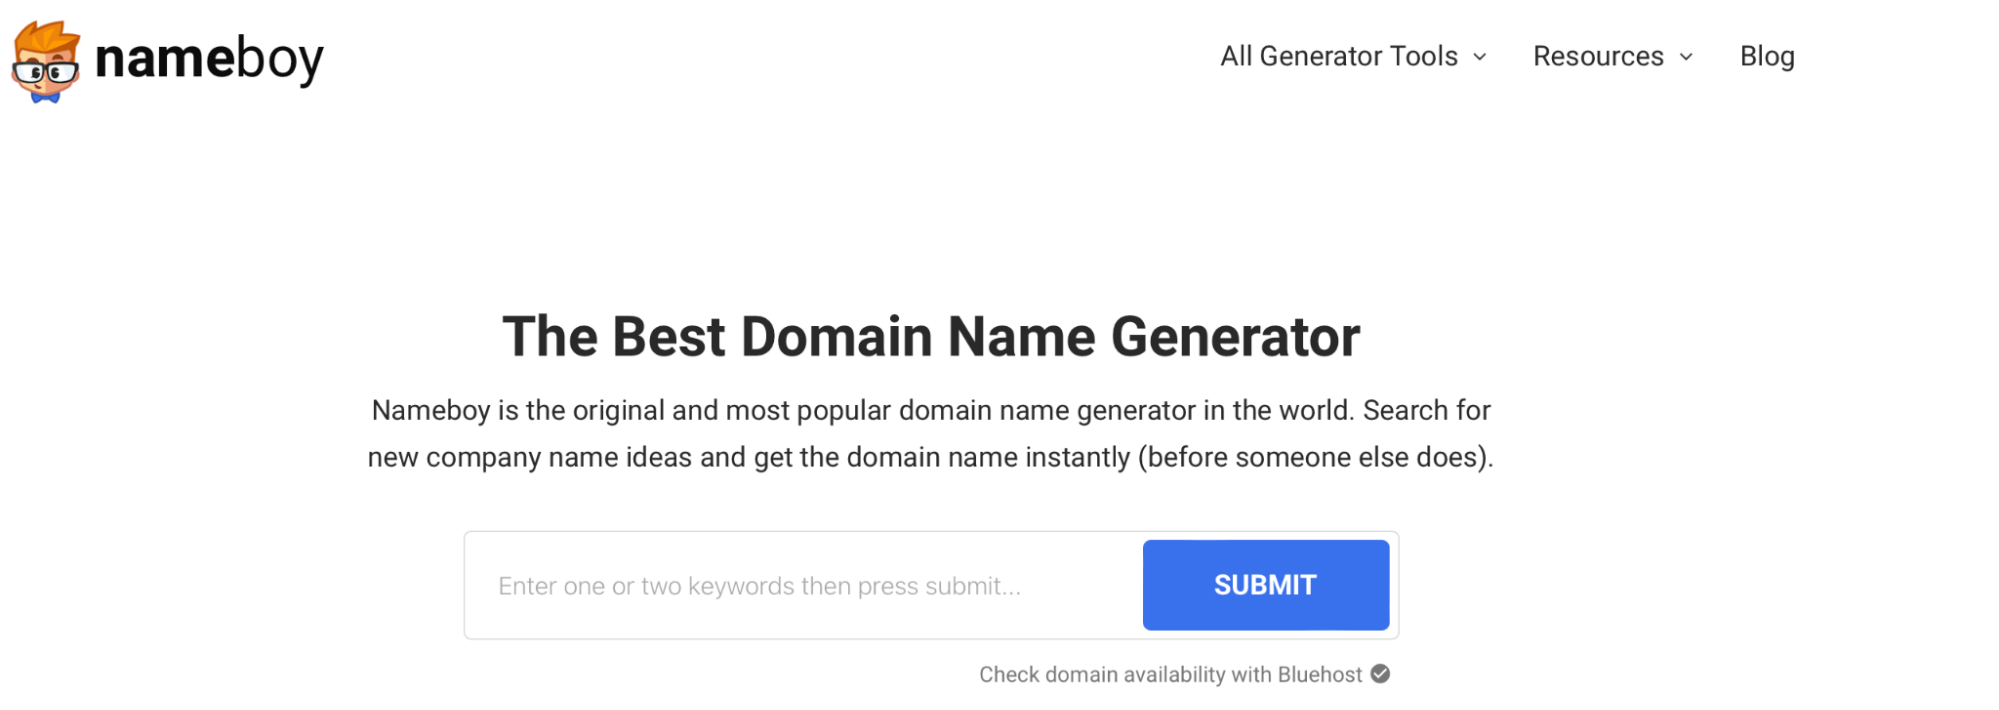 The Nameboy domain name generator